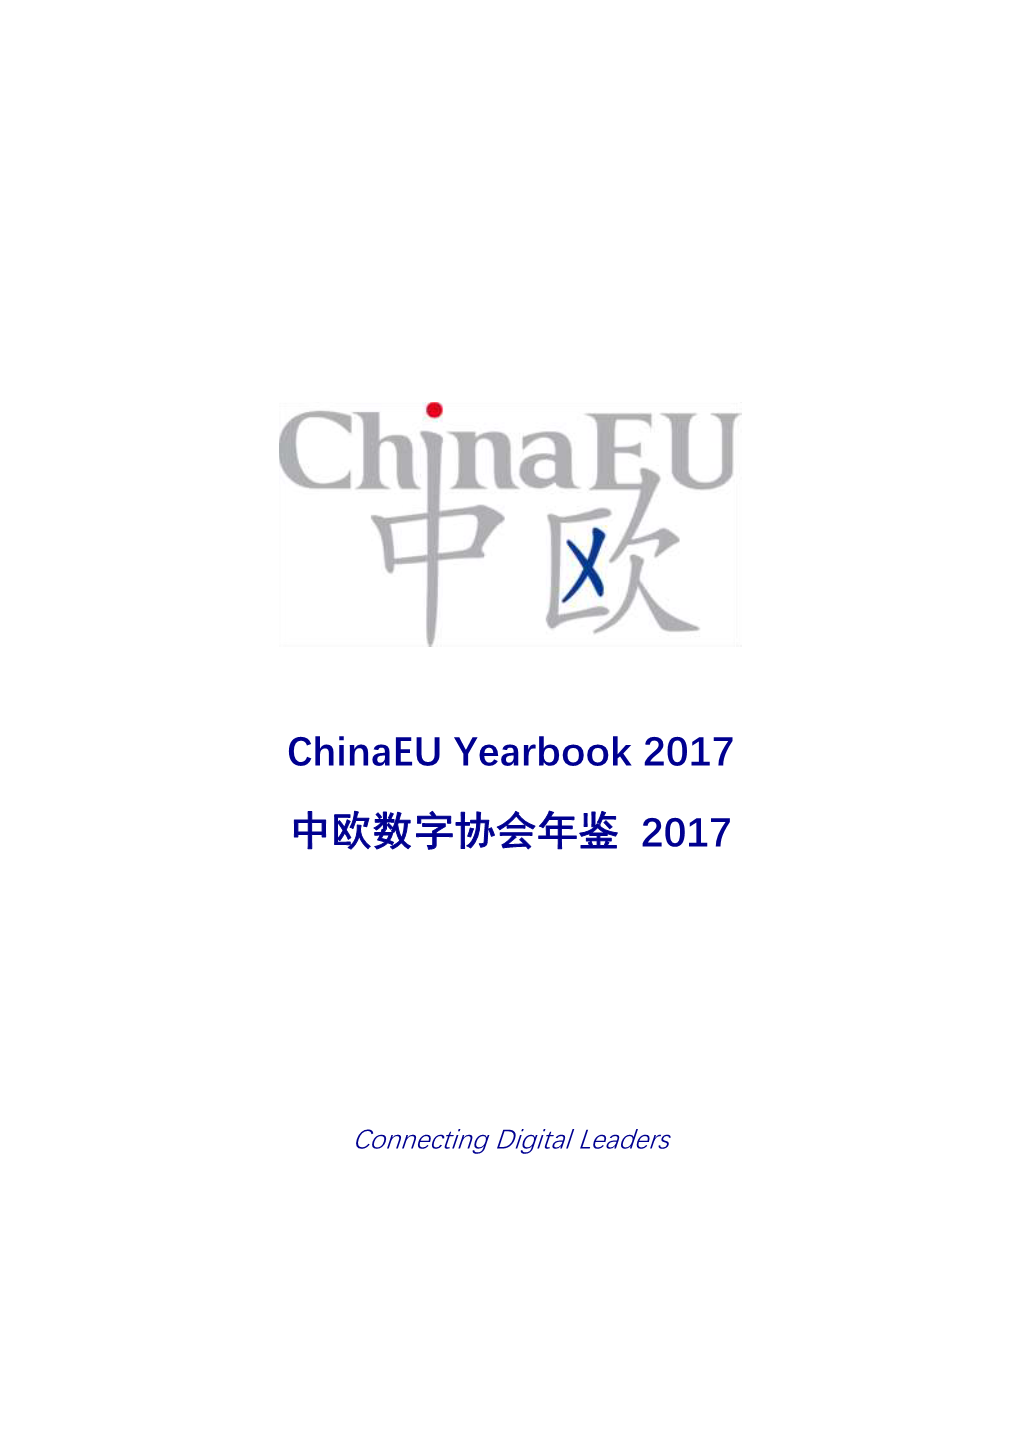 Chinaeu Yearbook 2017 中欧数字协会年鉴2017